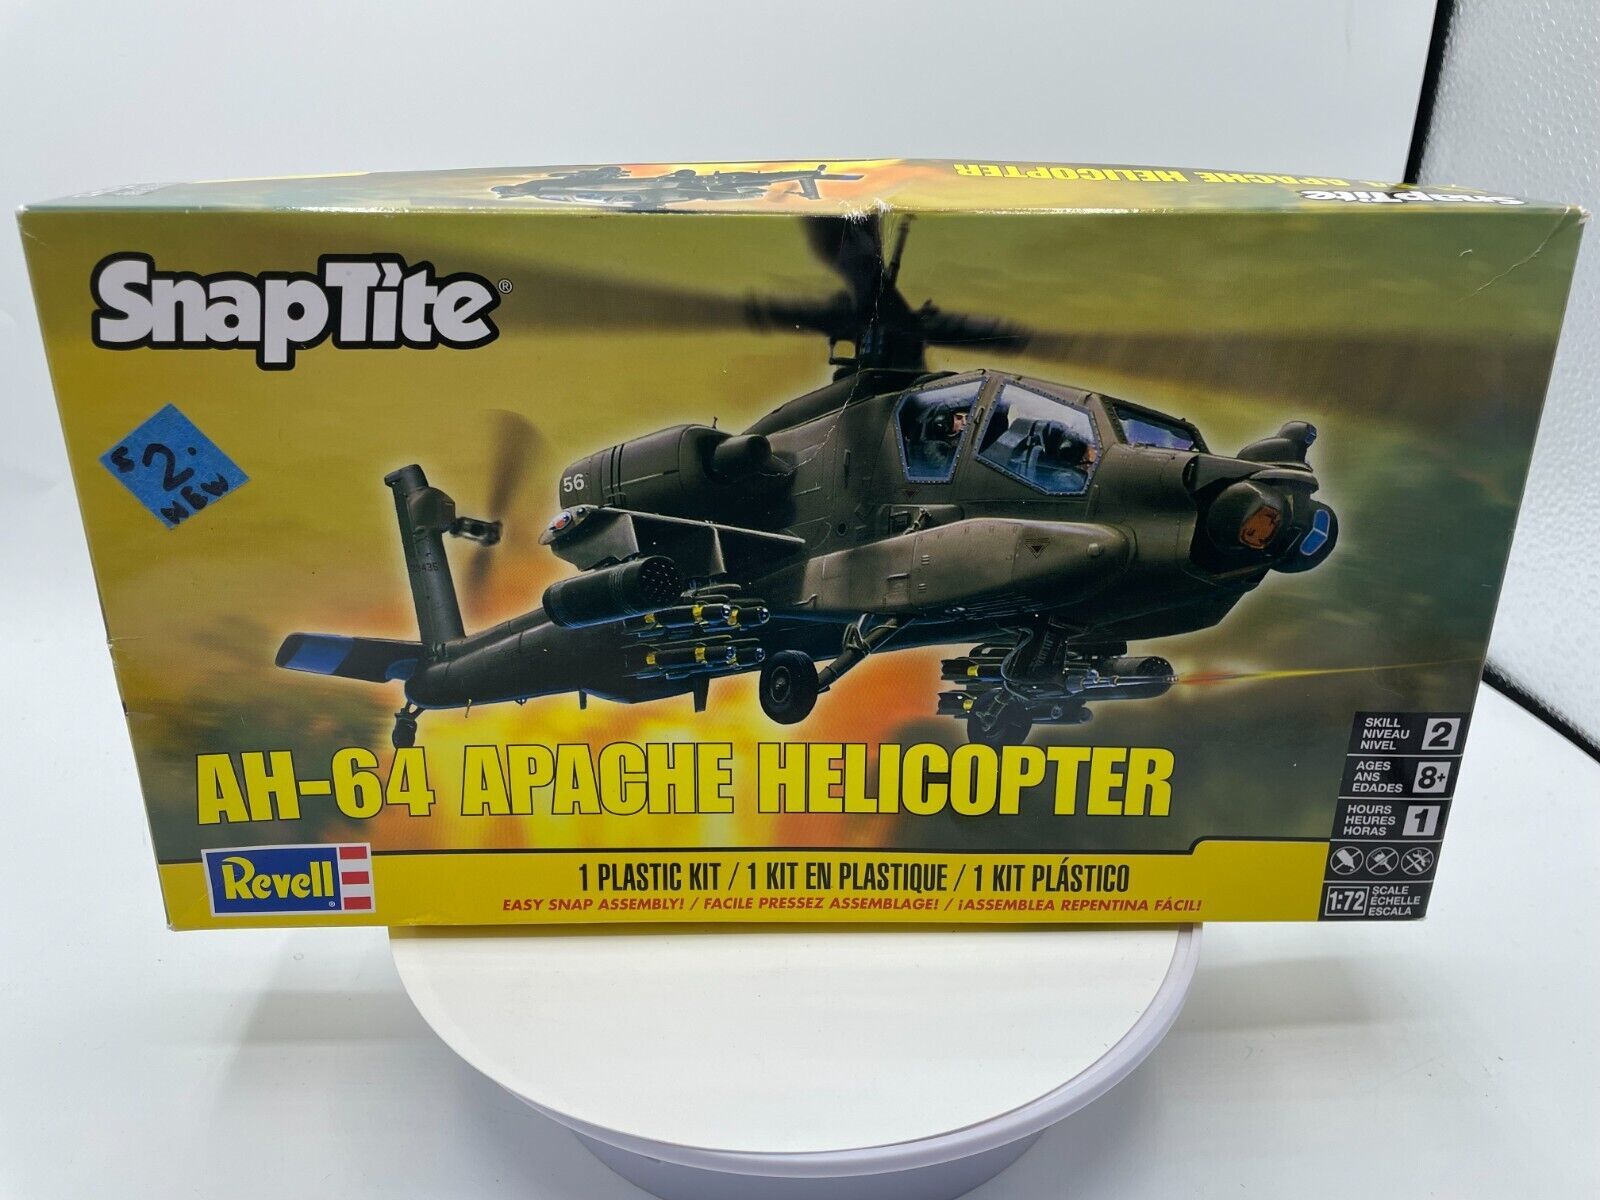 Revell Snaptite AH-64 Apache Helicopter Plastic Kit Scale 1:72 Model Kit New - $11.39